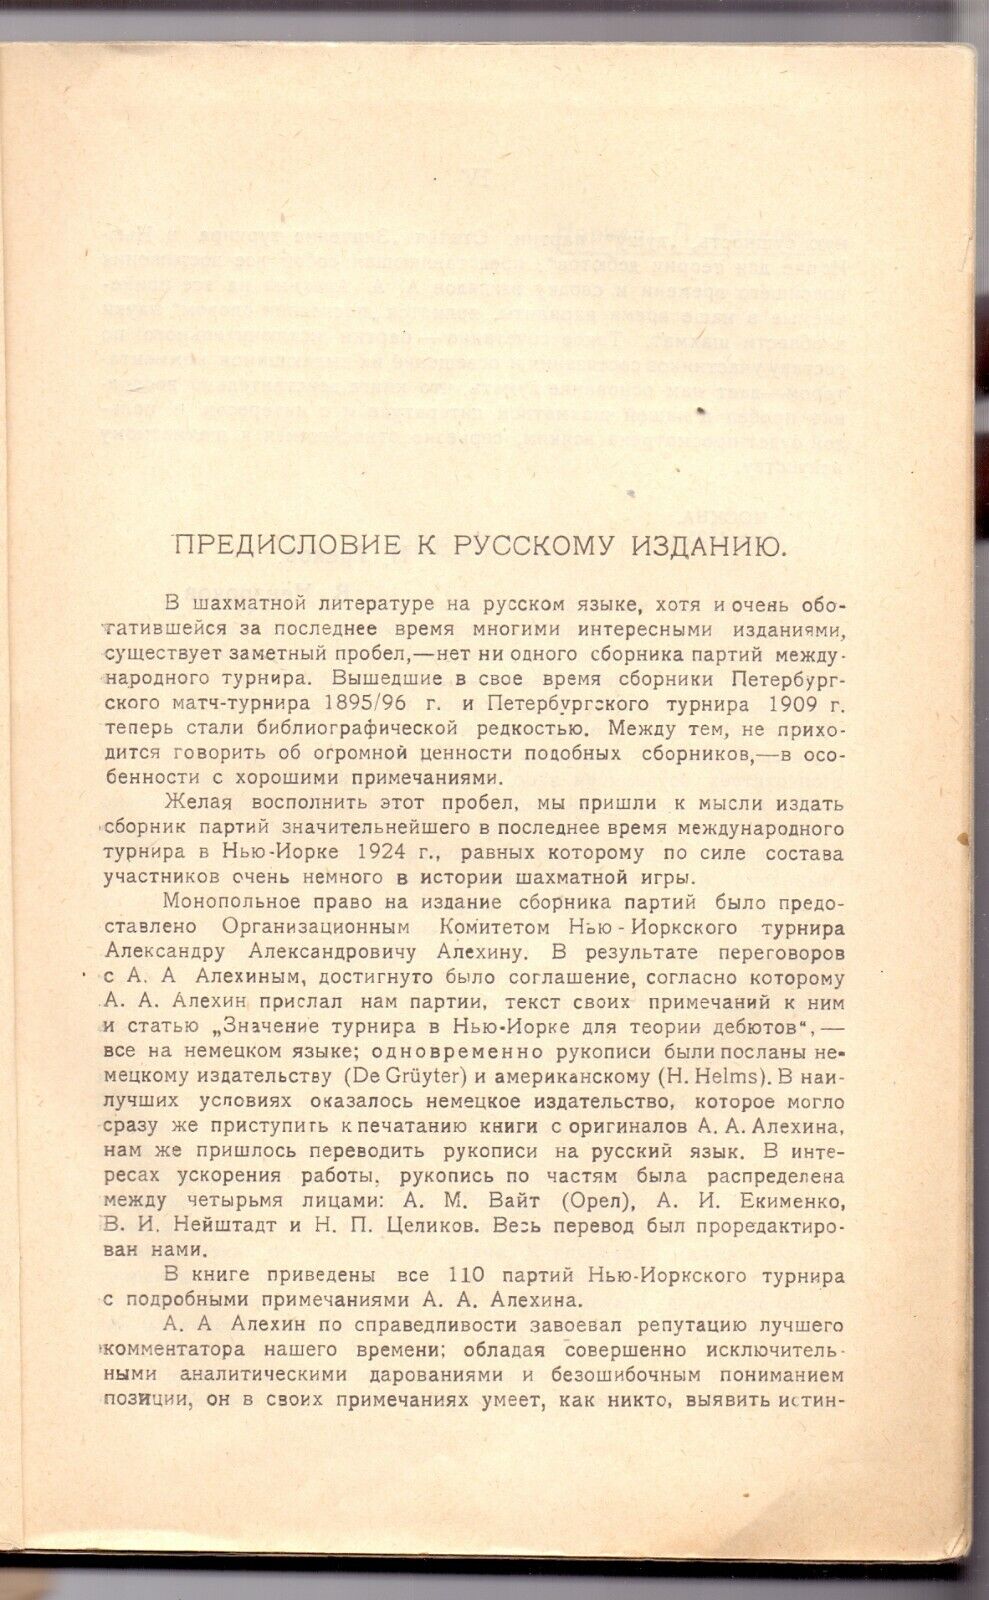 11096.Chess Book: N.Grekov, V.Nenarokov. York 1924 International Chess Tournament 1925